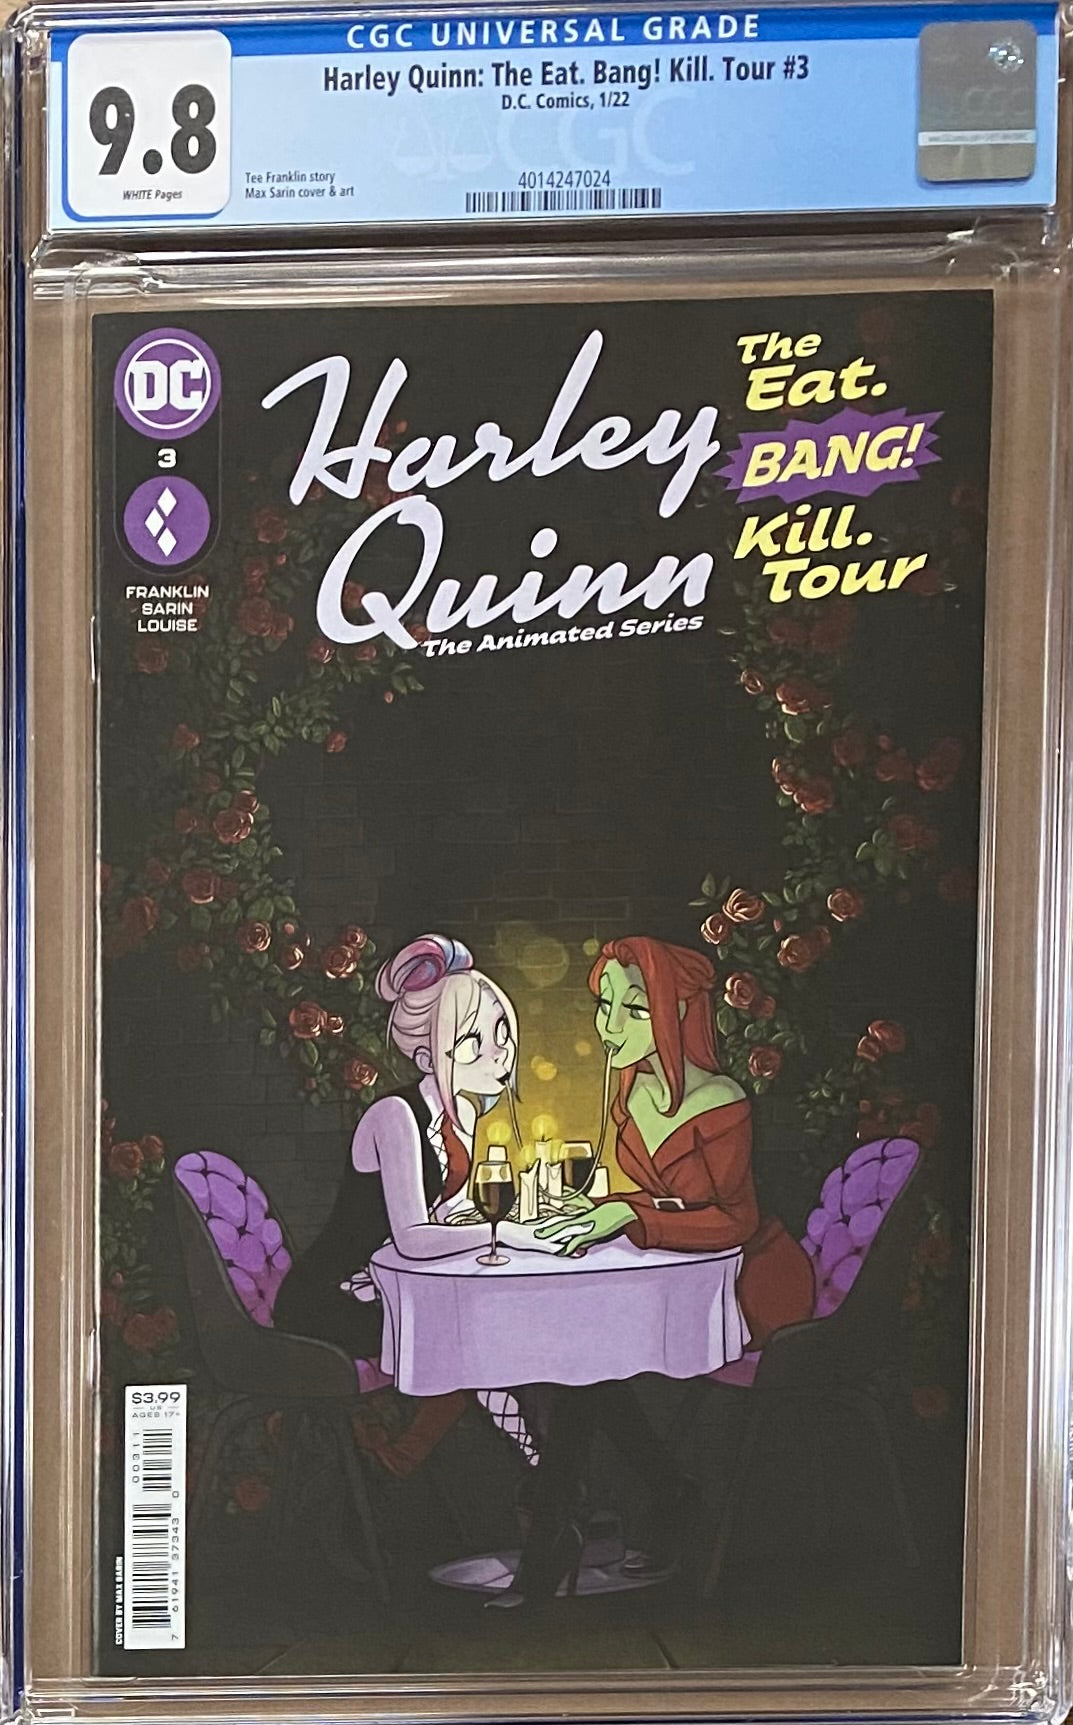 Harley Quinn: The Animated Series - The Eat, Bang! Kill Tour #3 CGC 9.8